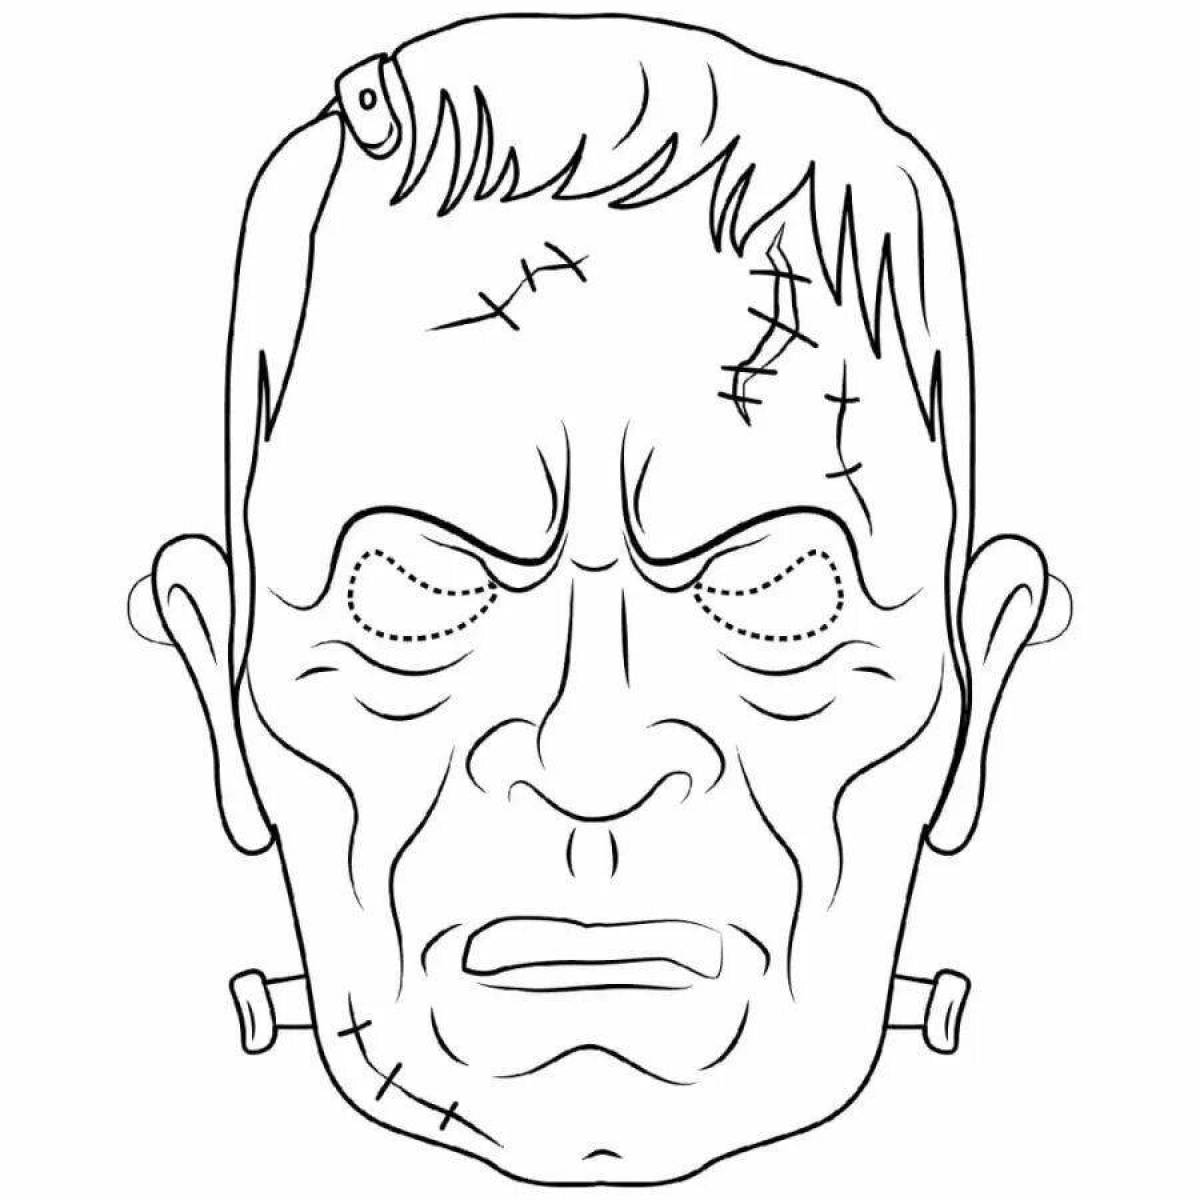 Sinister Frankenstein coloring page